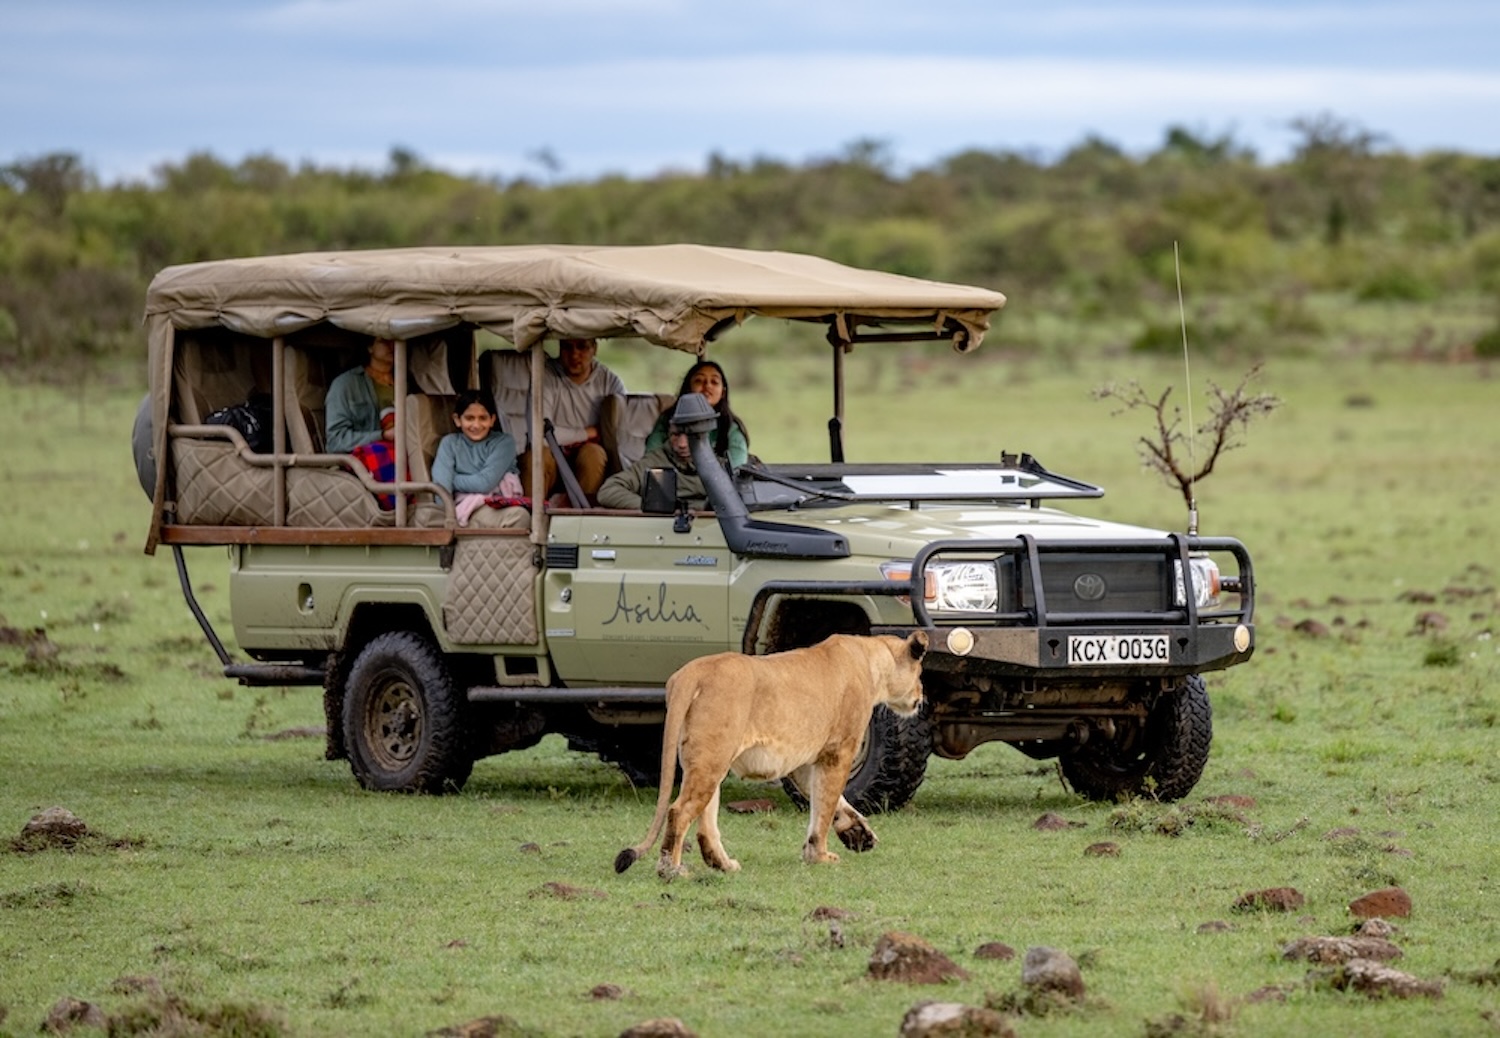 A game drive vehicle encounters a lion in the Masai Mara